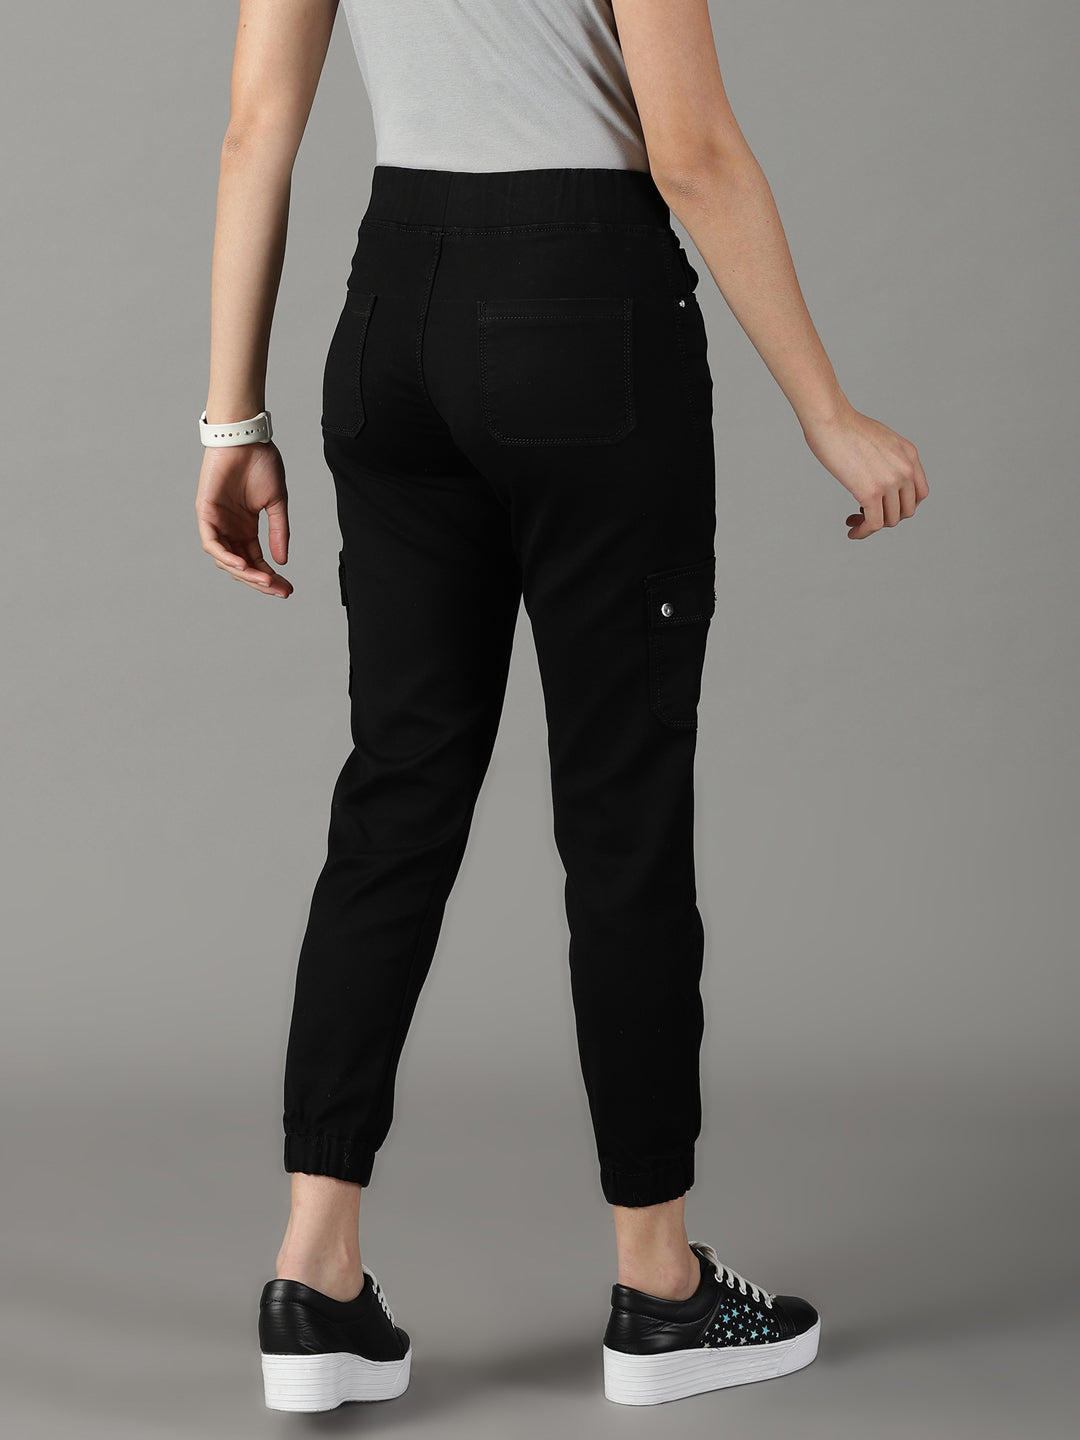 Women's Black Solid Jogger Denim Jeans